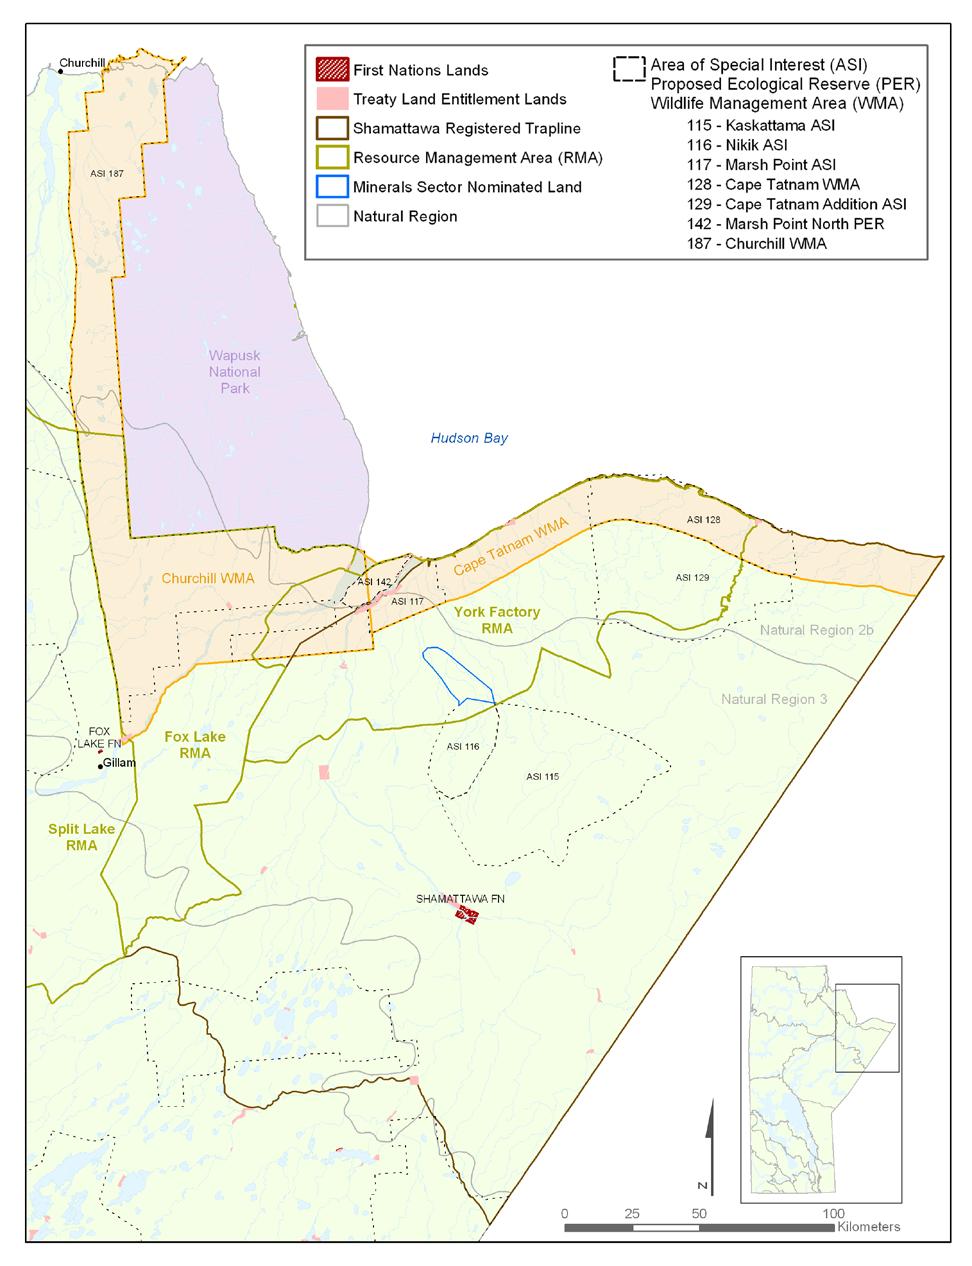 Areas of Special Interest (ASI) The proposed protected areas in the Hudson Bay Lowlands are ASI 115 Kaskattama, ASI 116 Nikik, ASI 117 Marsh Point, ASI 128 Cape Tatnam Wildlife Management Area, ASI